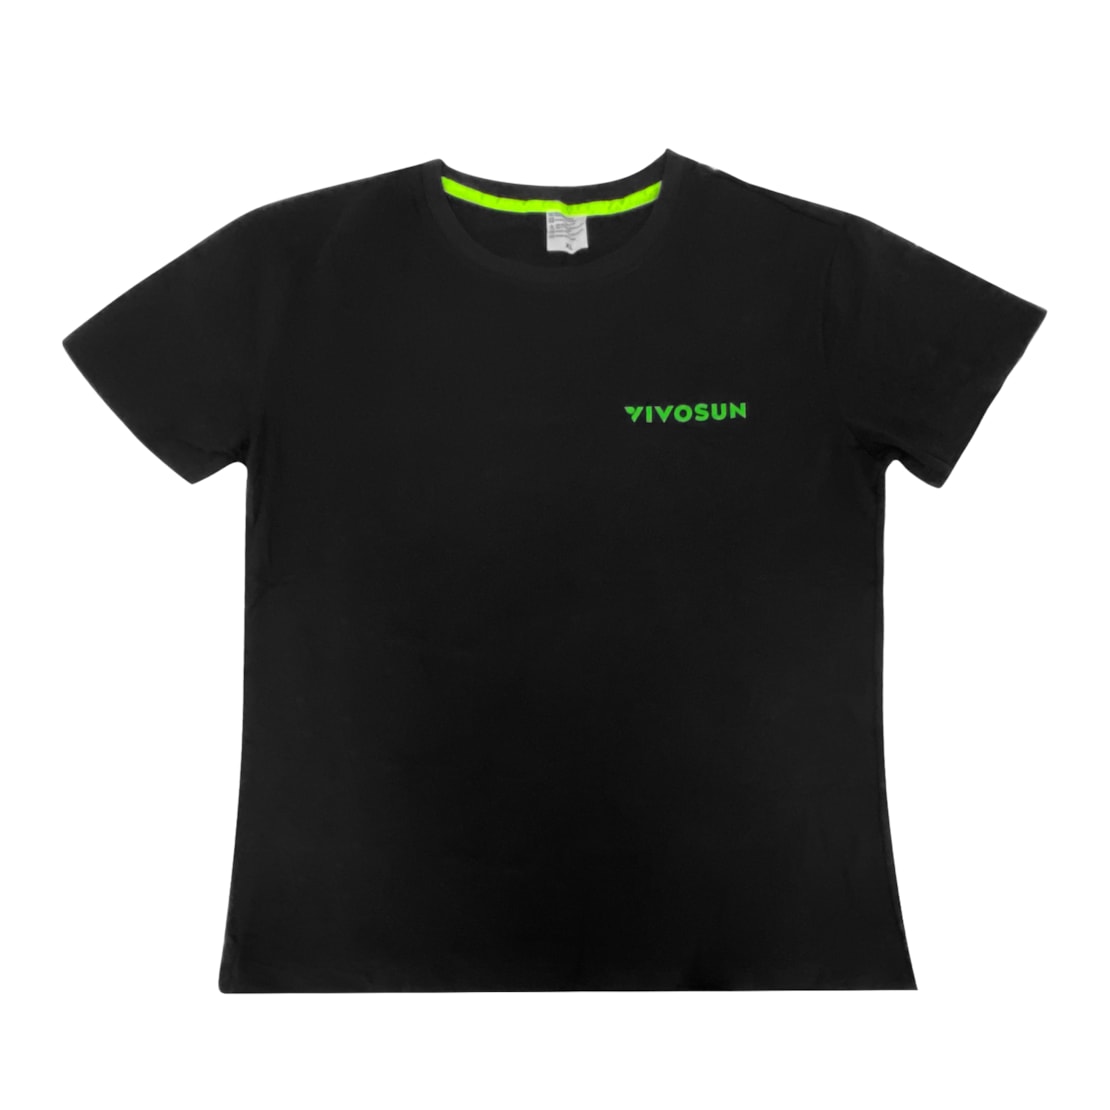 VIVOSUN T-shirt XL Gift Box Included